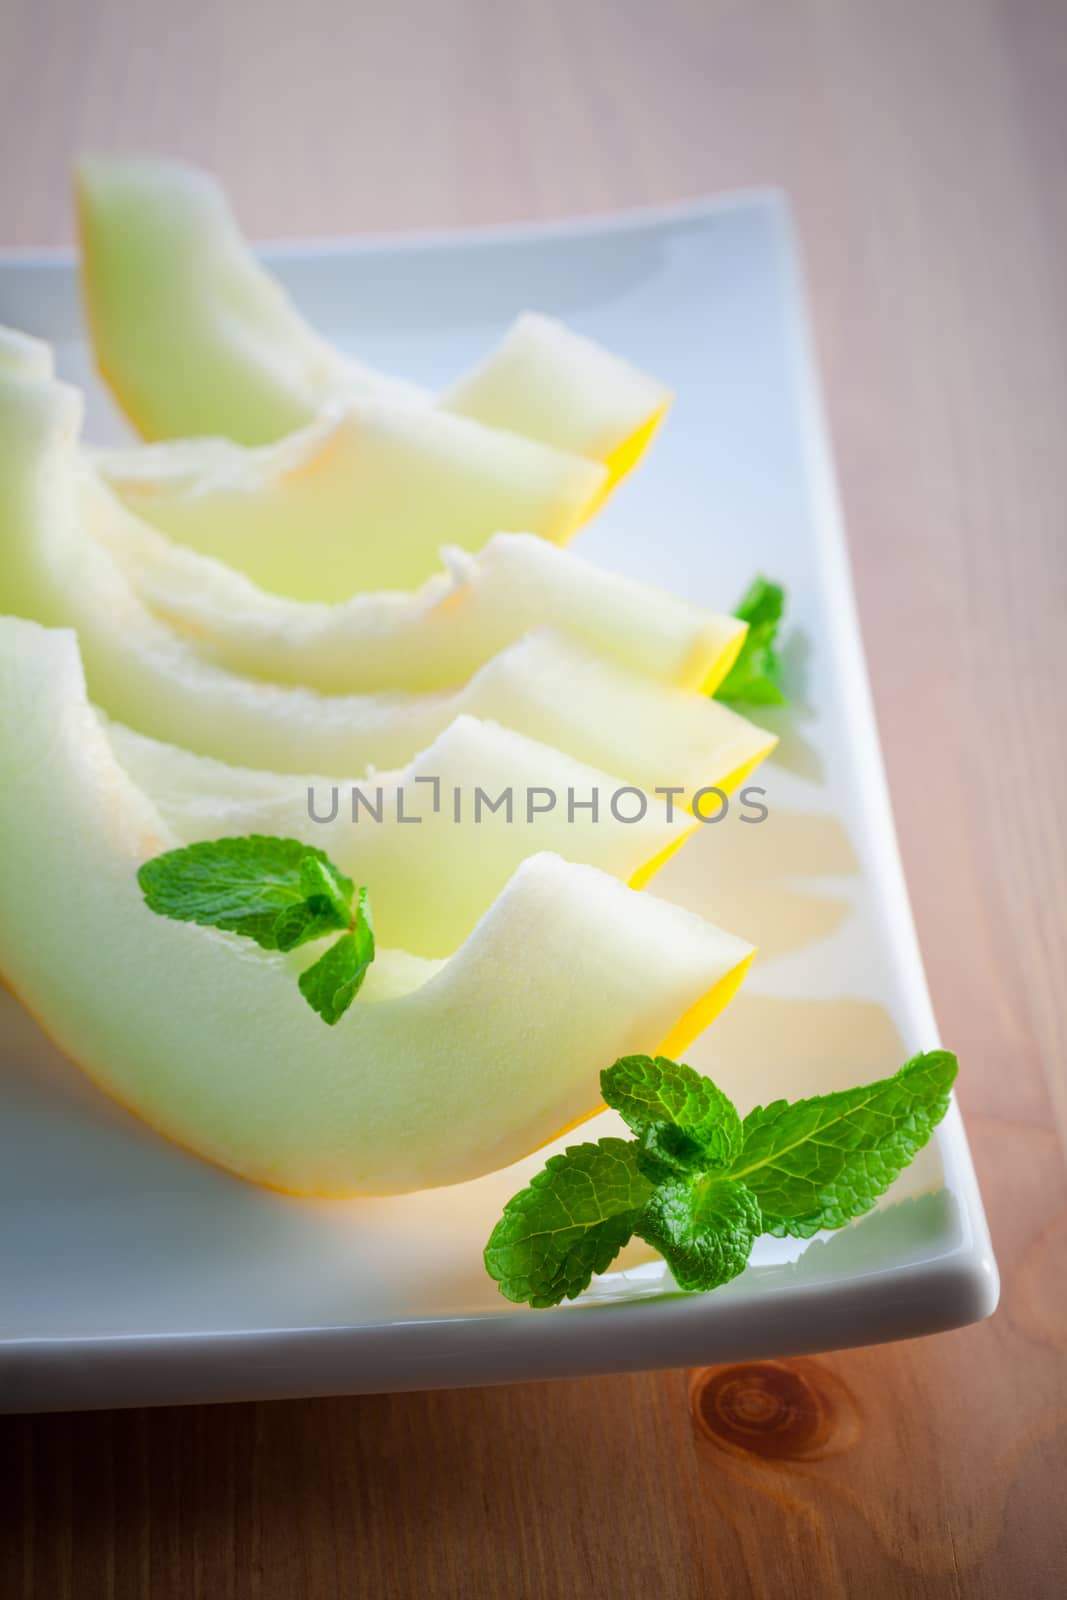 Honeydew melon slices by supercat67